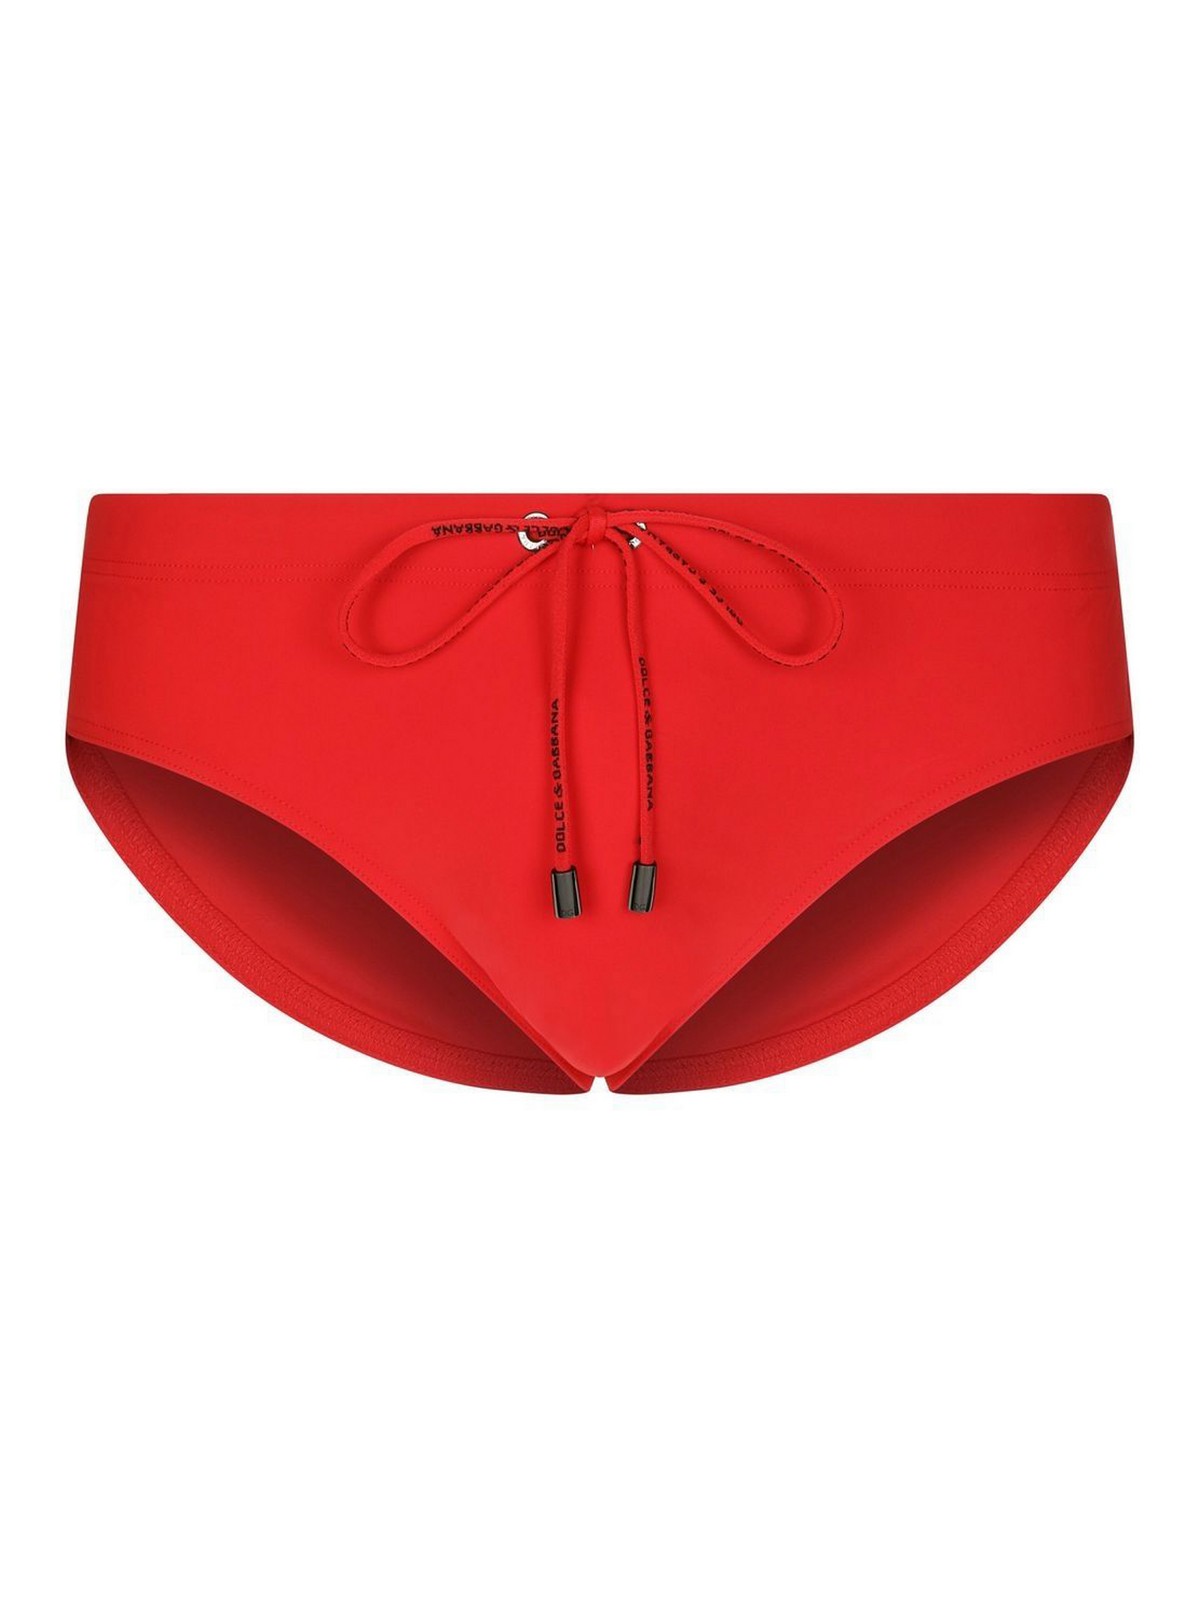 Dolce & Gabbana Swimming Trunks In Red